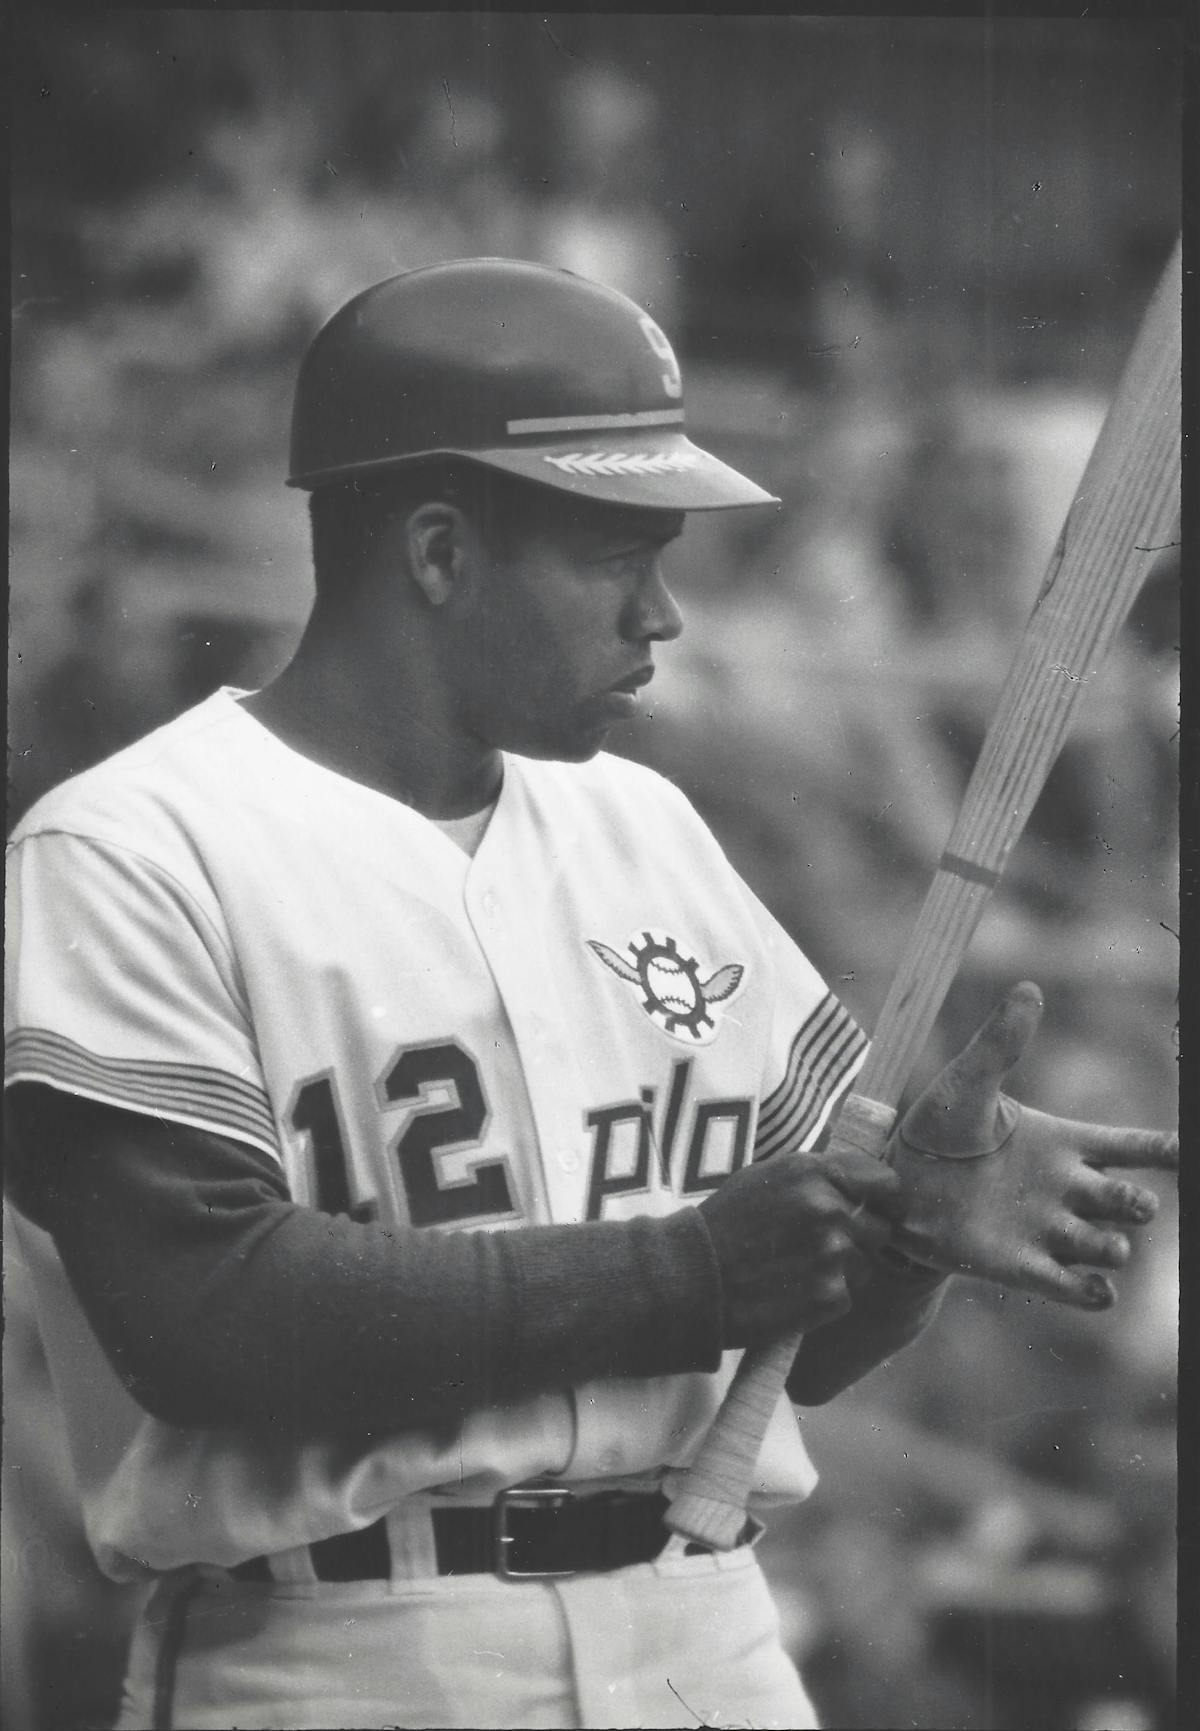 a man holding a baseball bat